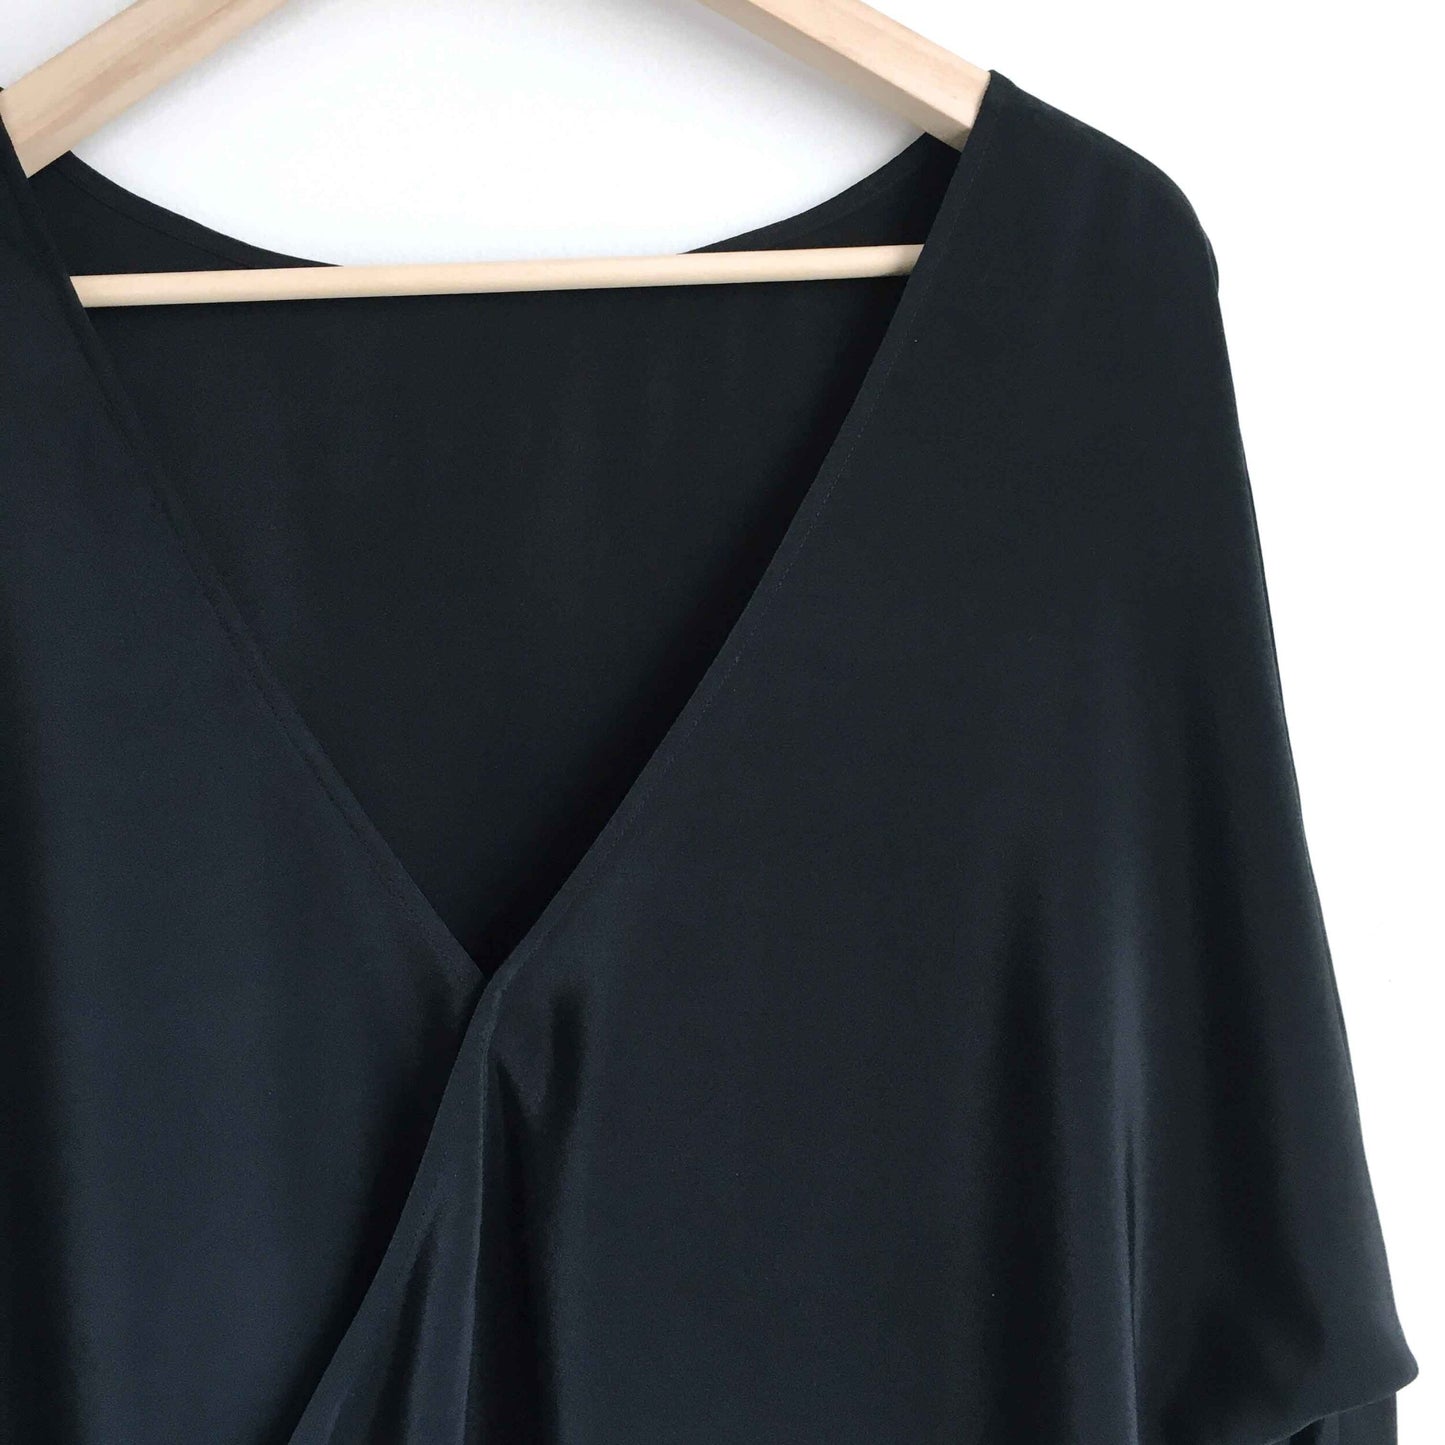 Joie silk wrap blouse - size Large